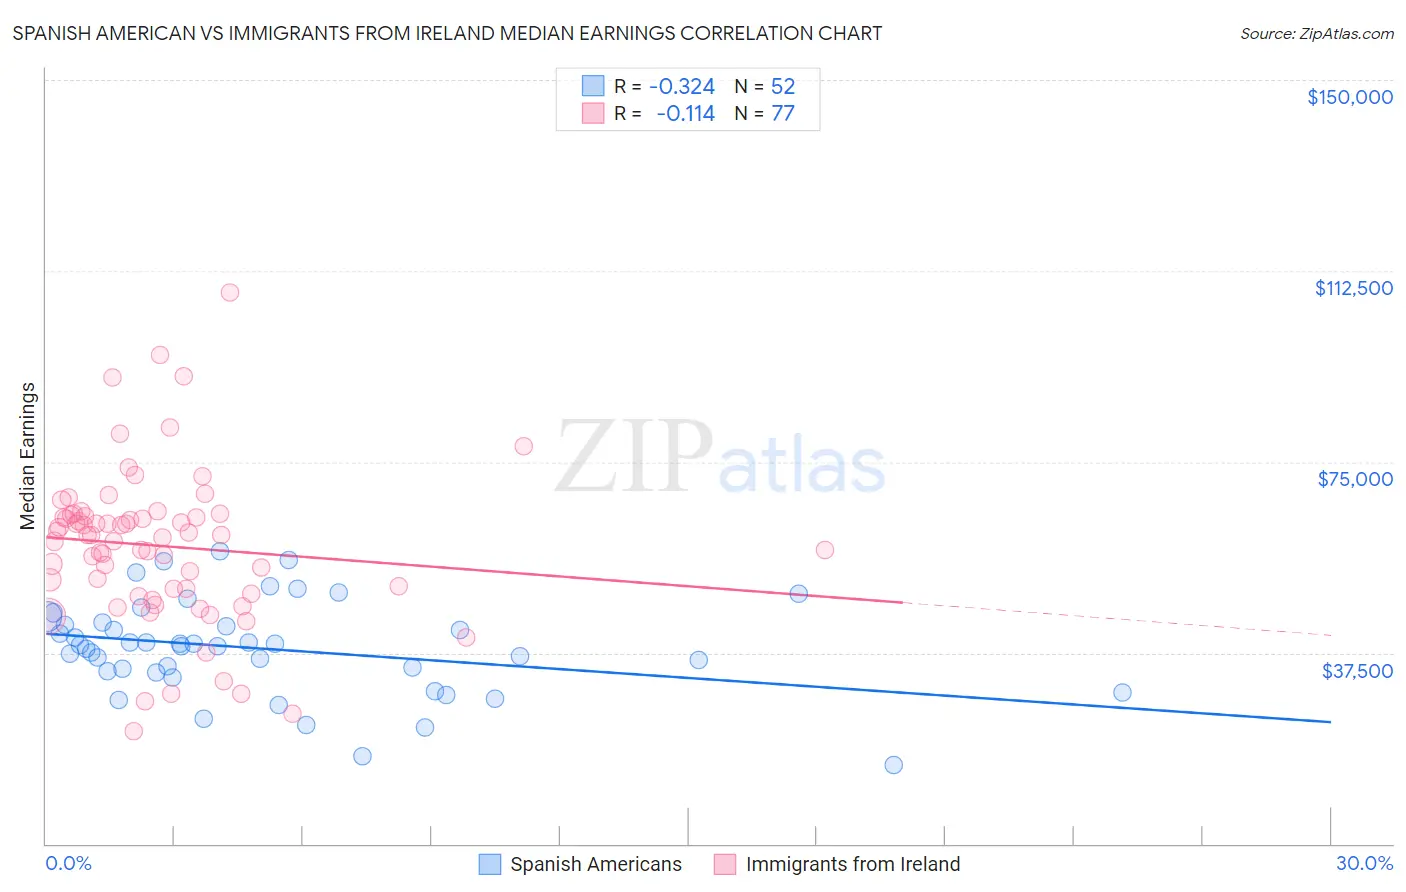 Spanish American vs Immigrants from Ireland Median Earnings